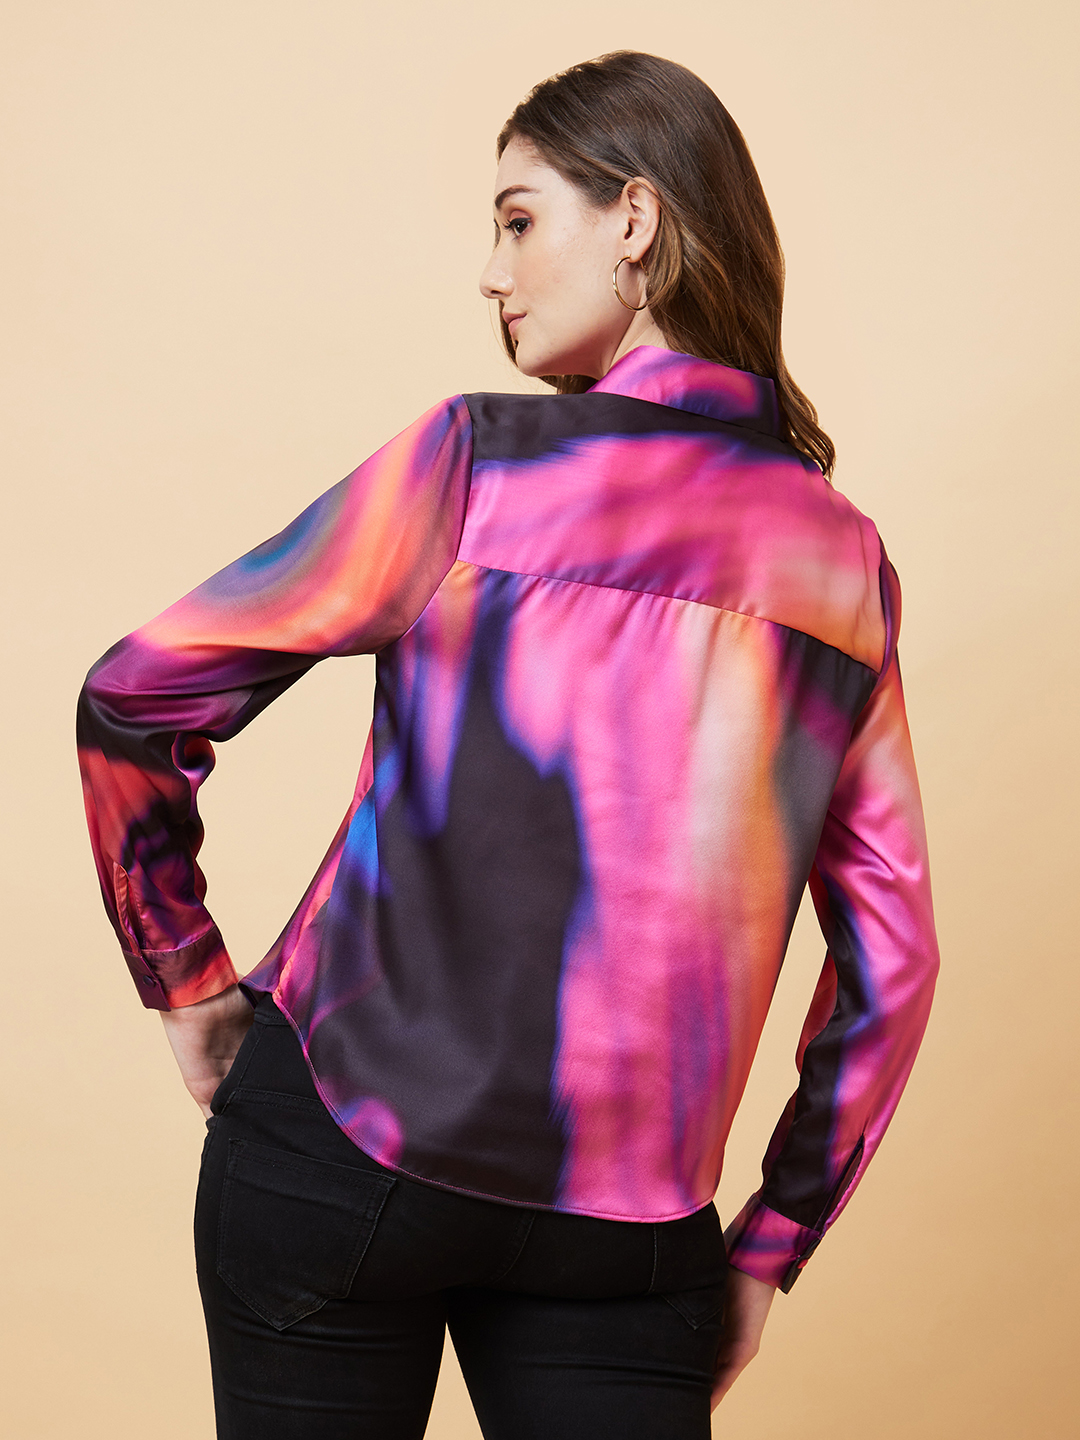 Globus Women Multi Galaxy Print Cuffed Sleeves Shirt Style Party Top